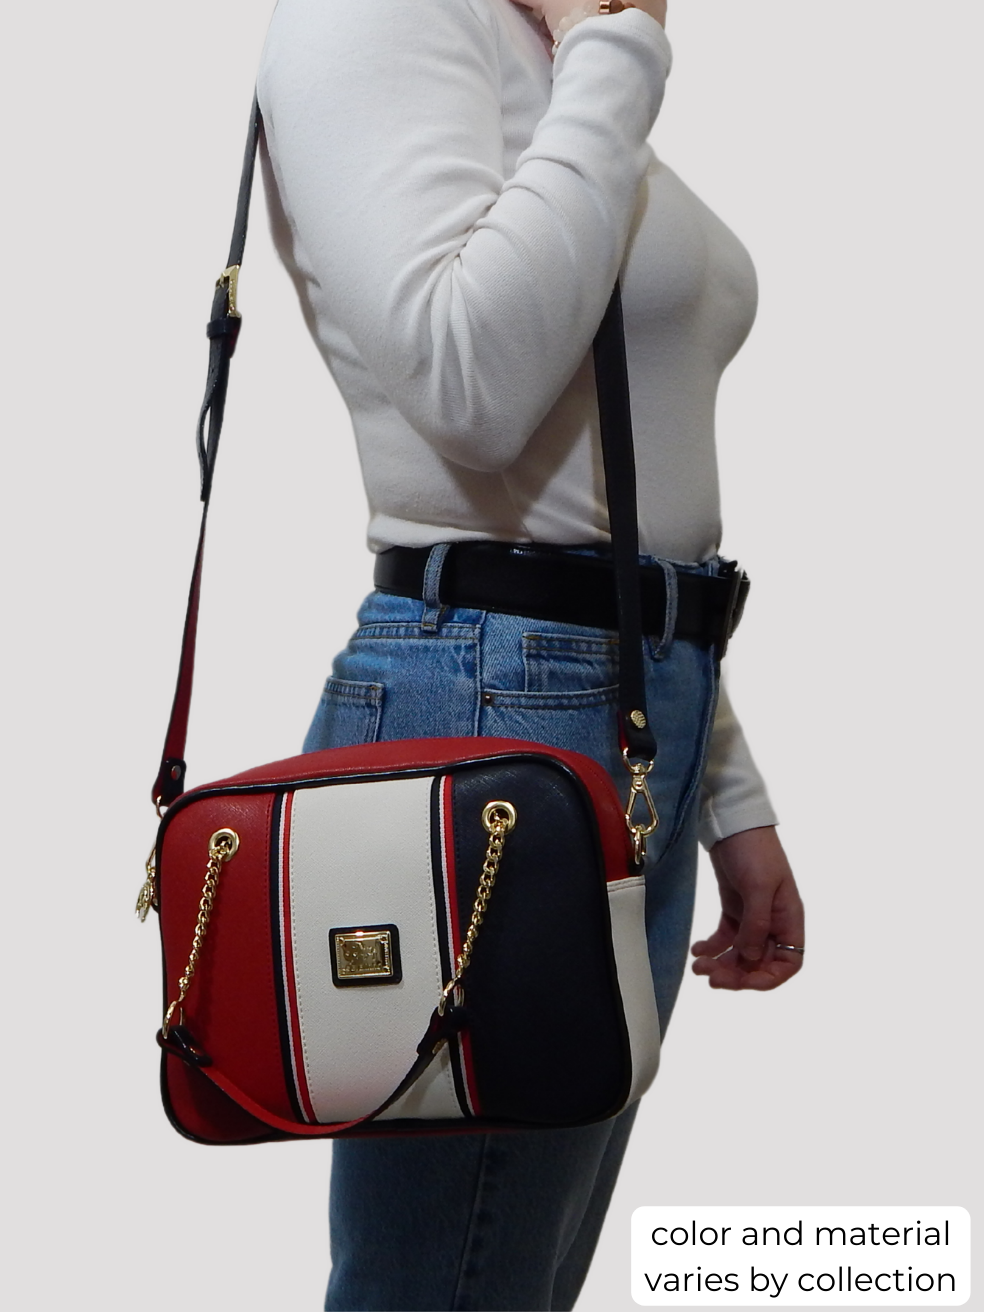 #color_ Beige White | Cavalinho Gallop Patent Leather Handbag - Beige White - bodyshot_0512_2_839233d2-d75f-4ae3-9ba8-f5ac08377336